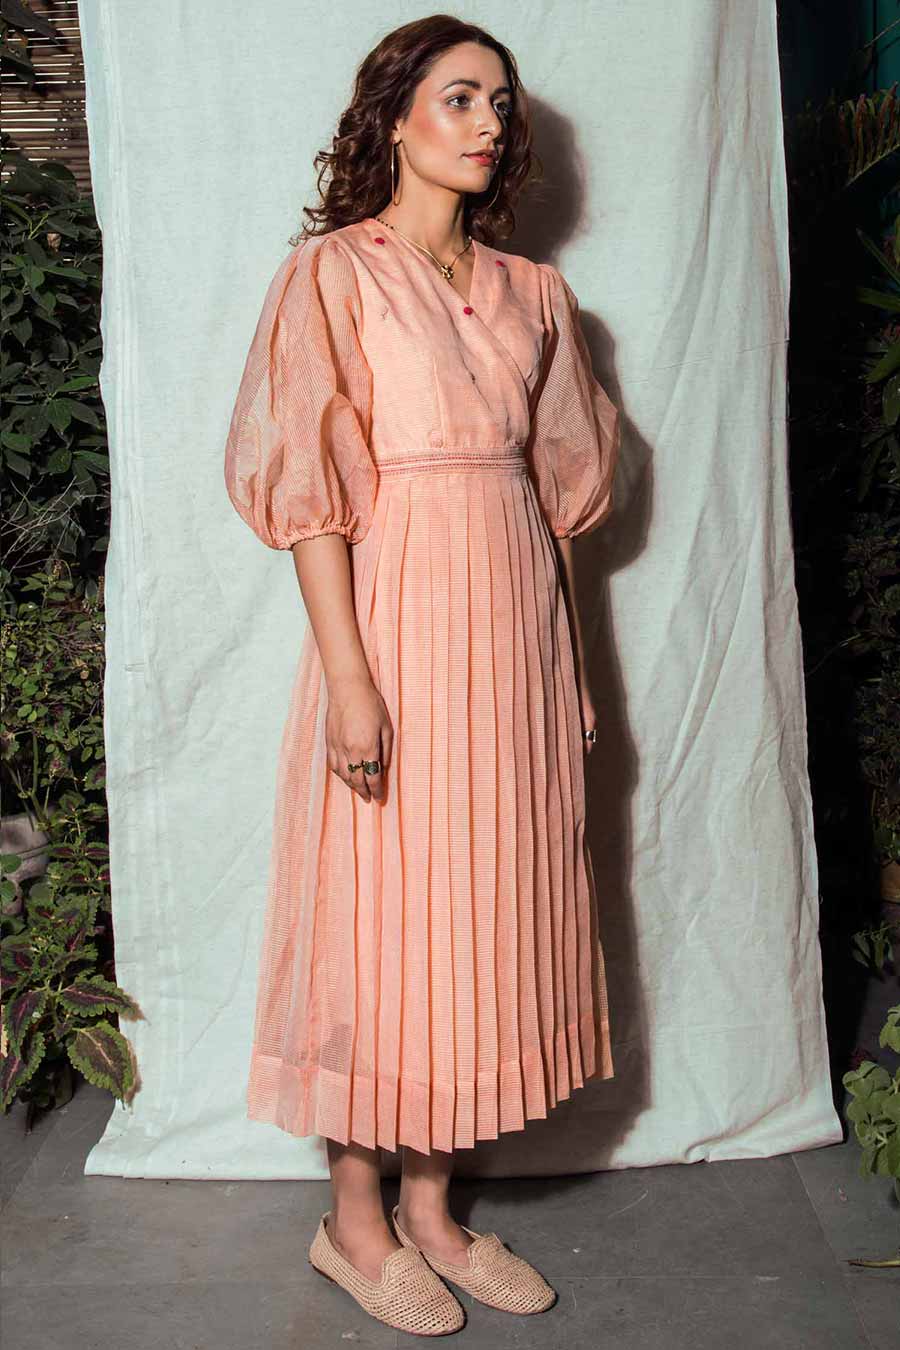 Peach Embroidered Handmade Dress